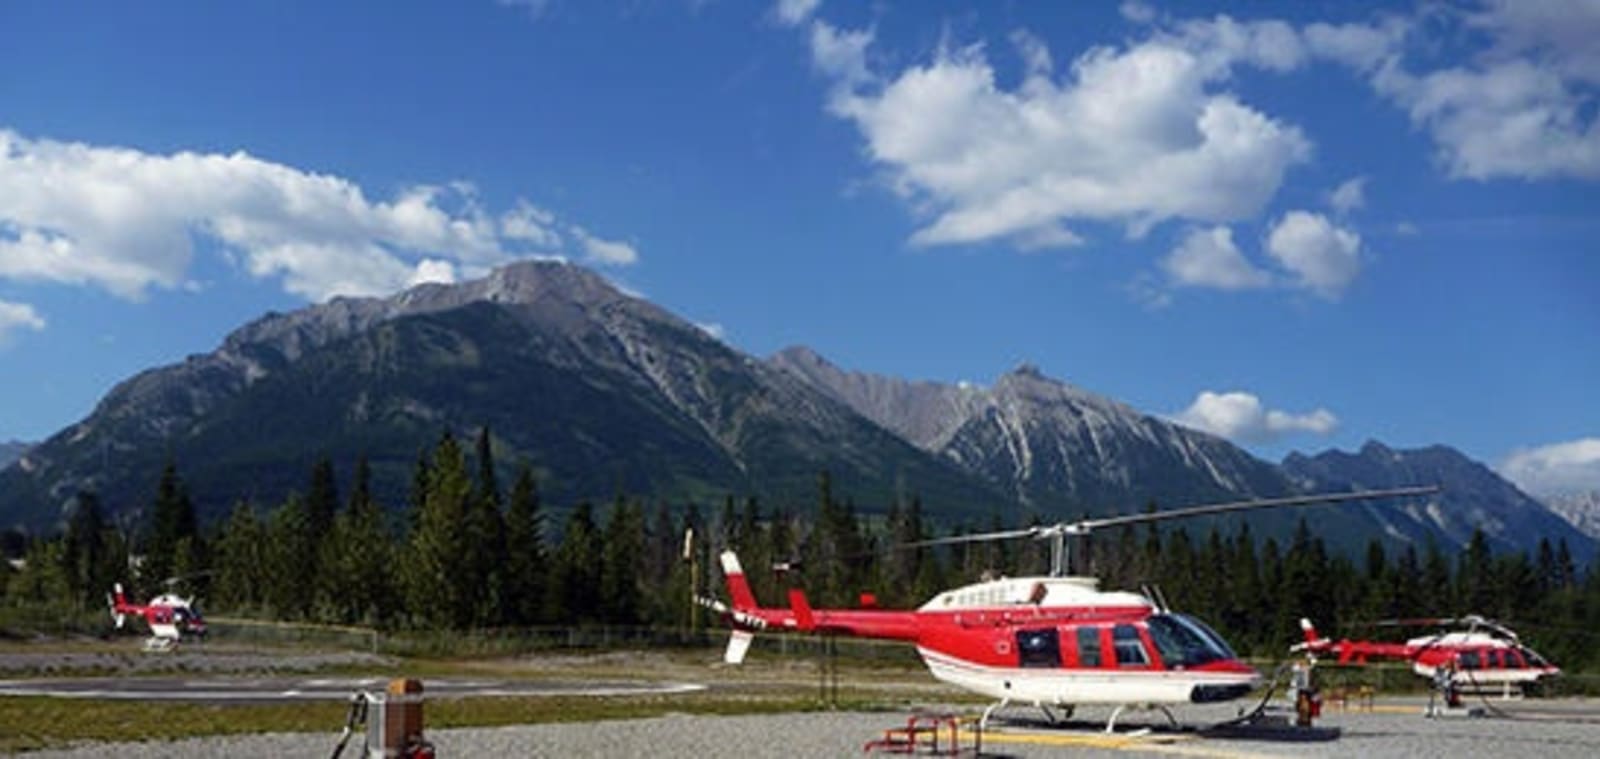 RS-helicopter-Banff-shutterstock_115722670.jpg